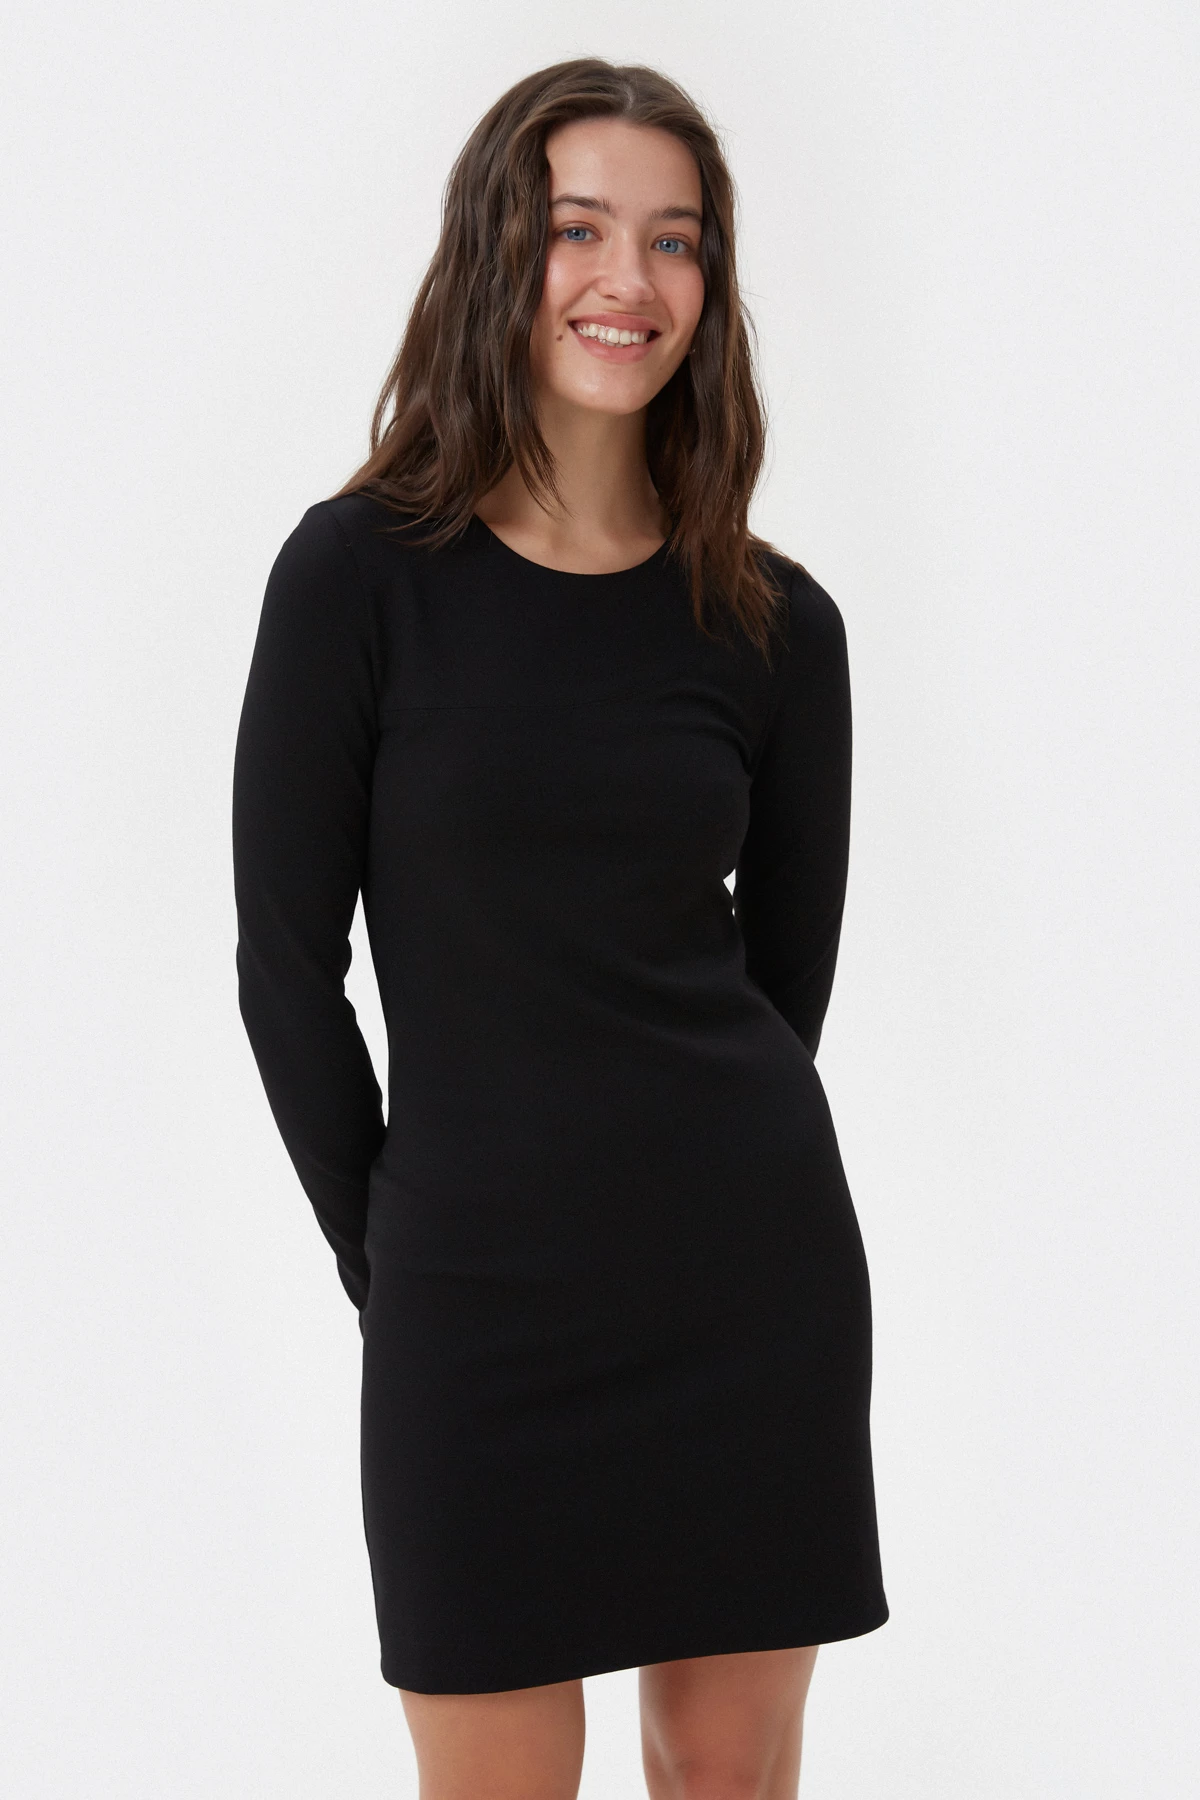 Short black dress of dense knitwear with viscose, photo 3